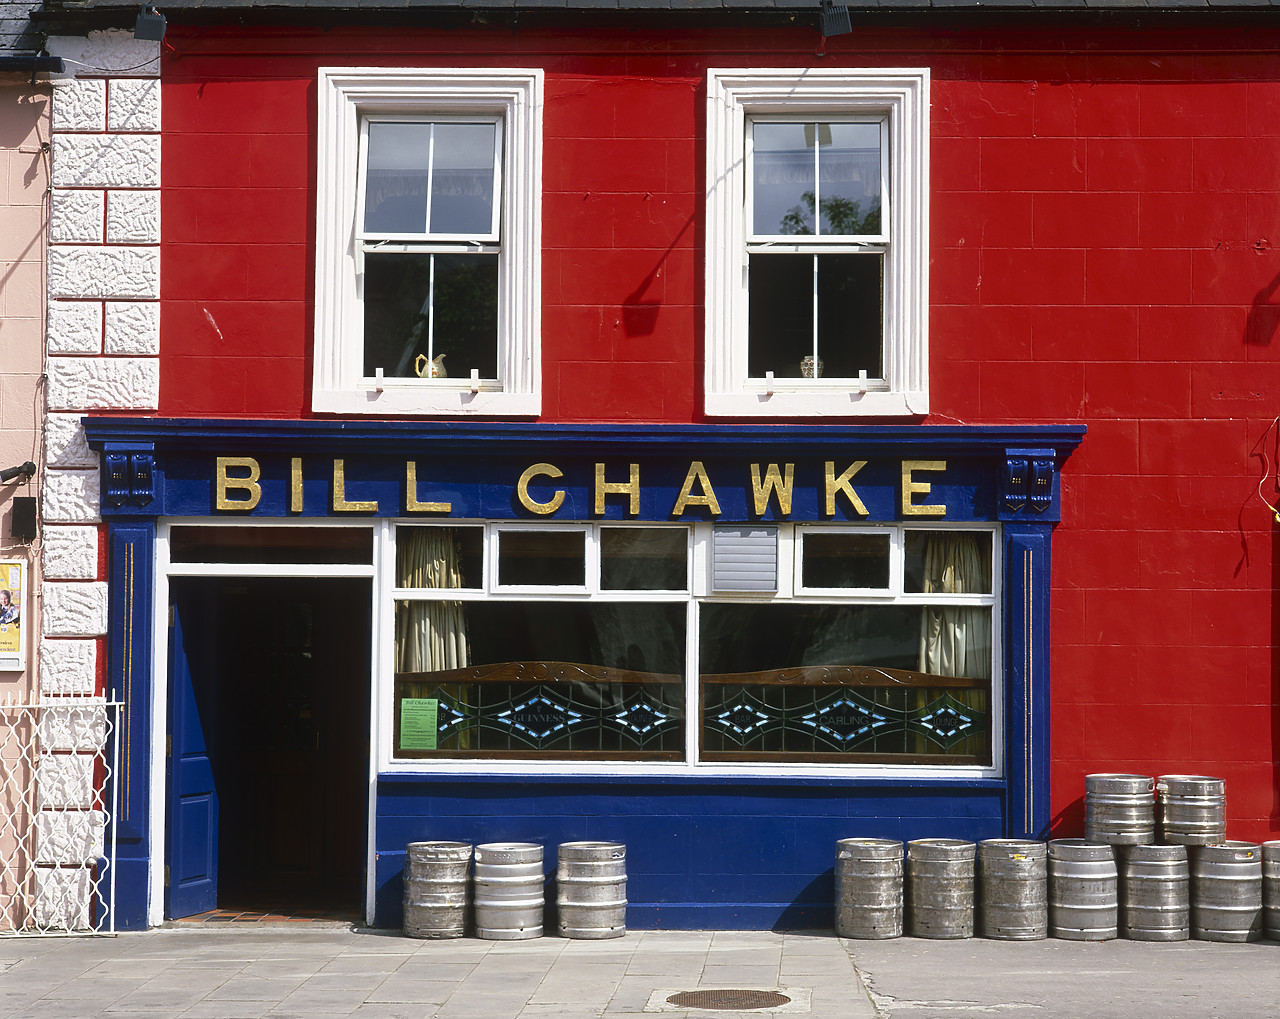 #030305-3 - Traditional Pub, Adare, Co. Limerick, Ireland